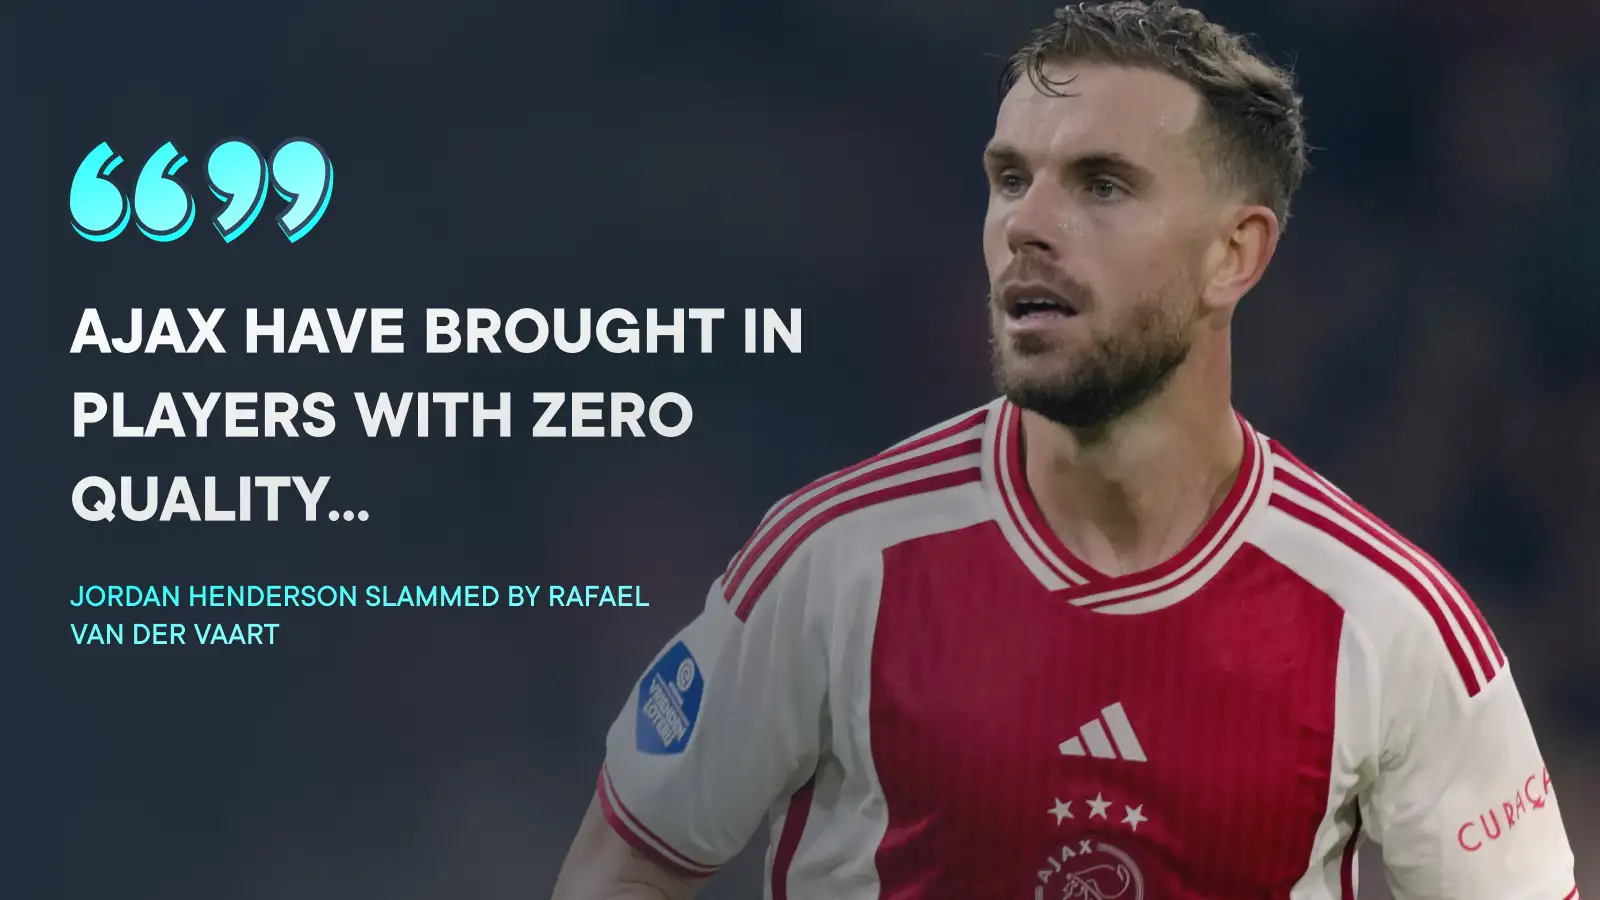 Jordan Henderson slammed for having ‘zero quality’ as ex-Liverpool star helps ‘nobody’ at Ajax